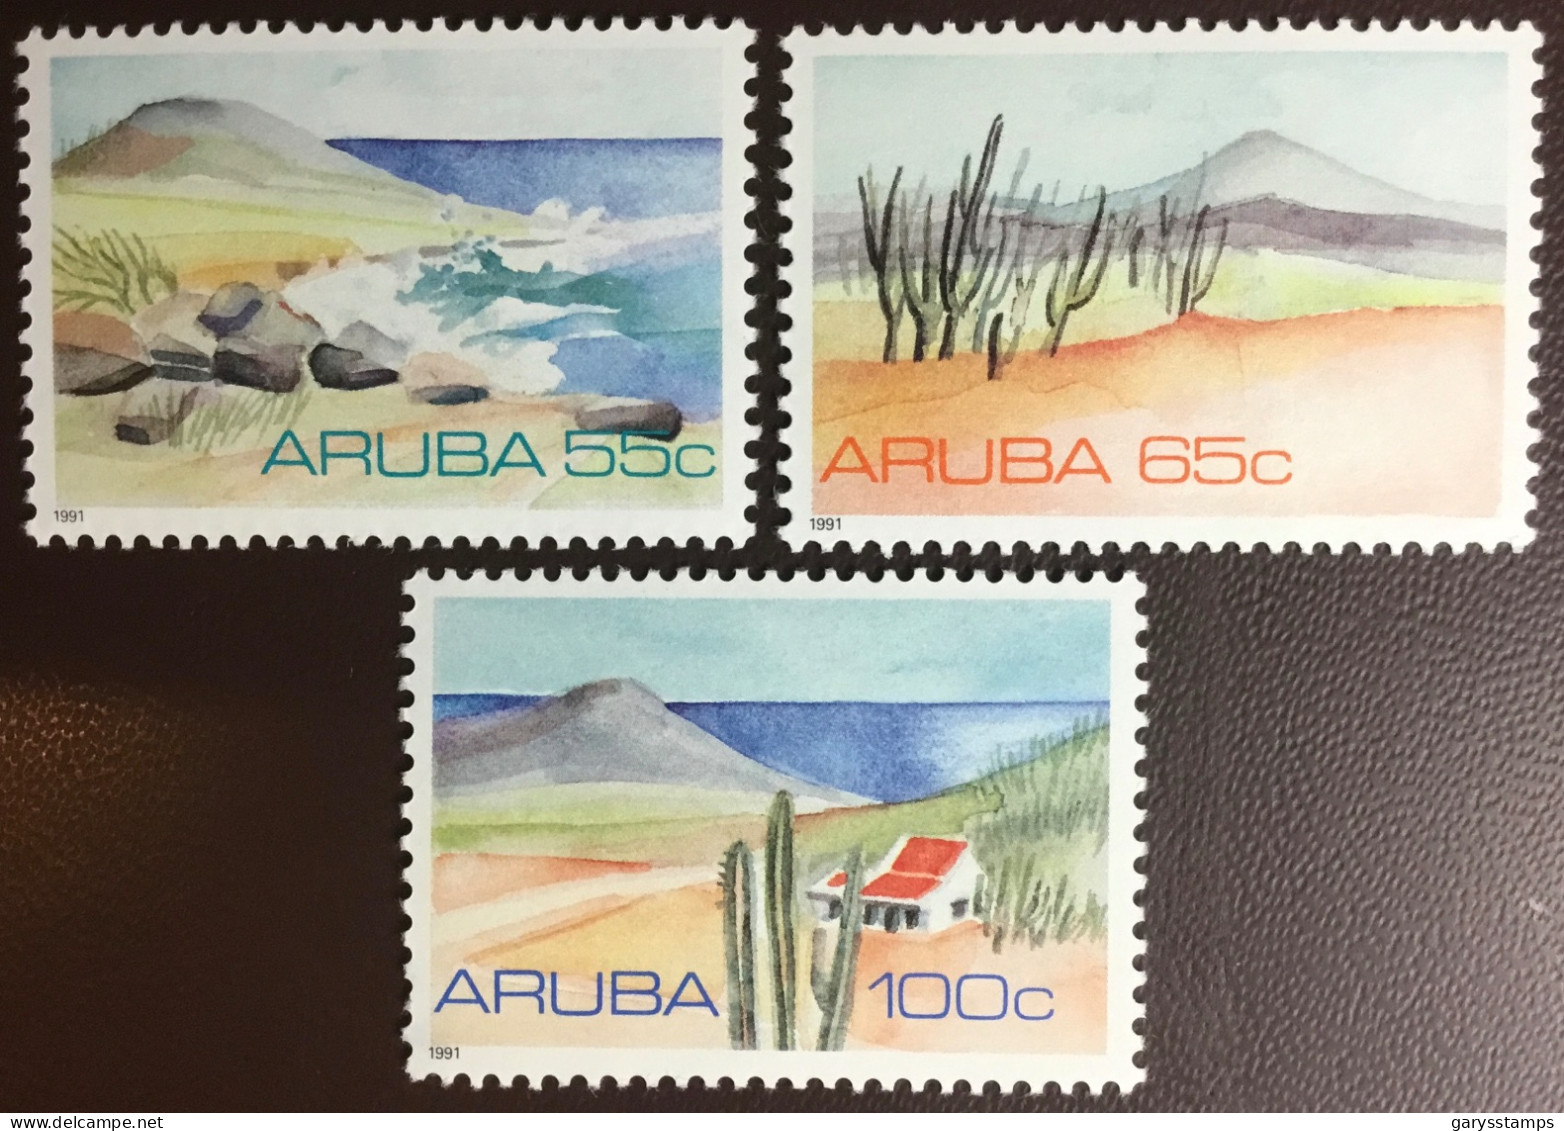 Aruba 1991 Landscapes MNH - Curacao, Netherlands Antilles, Aruba